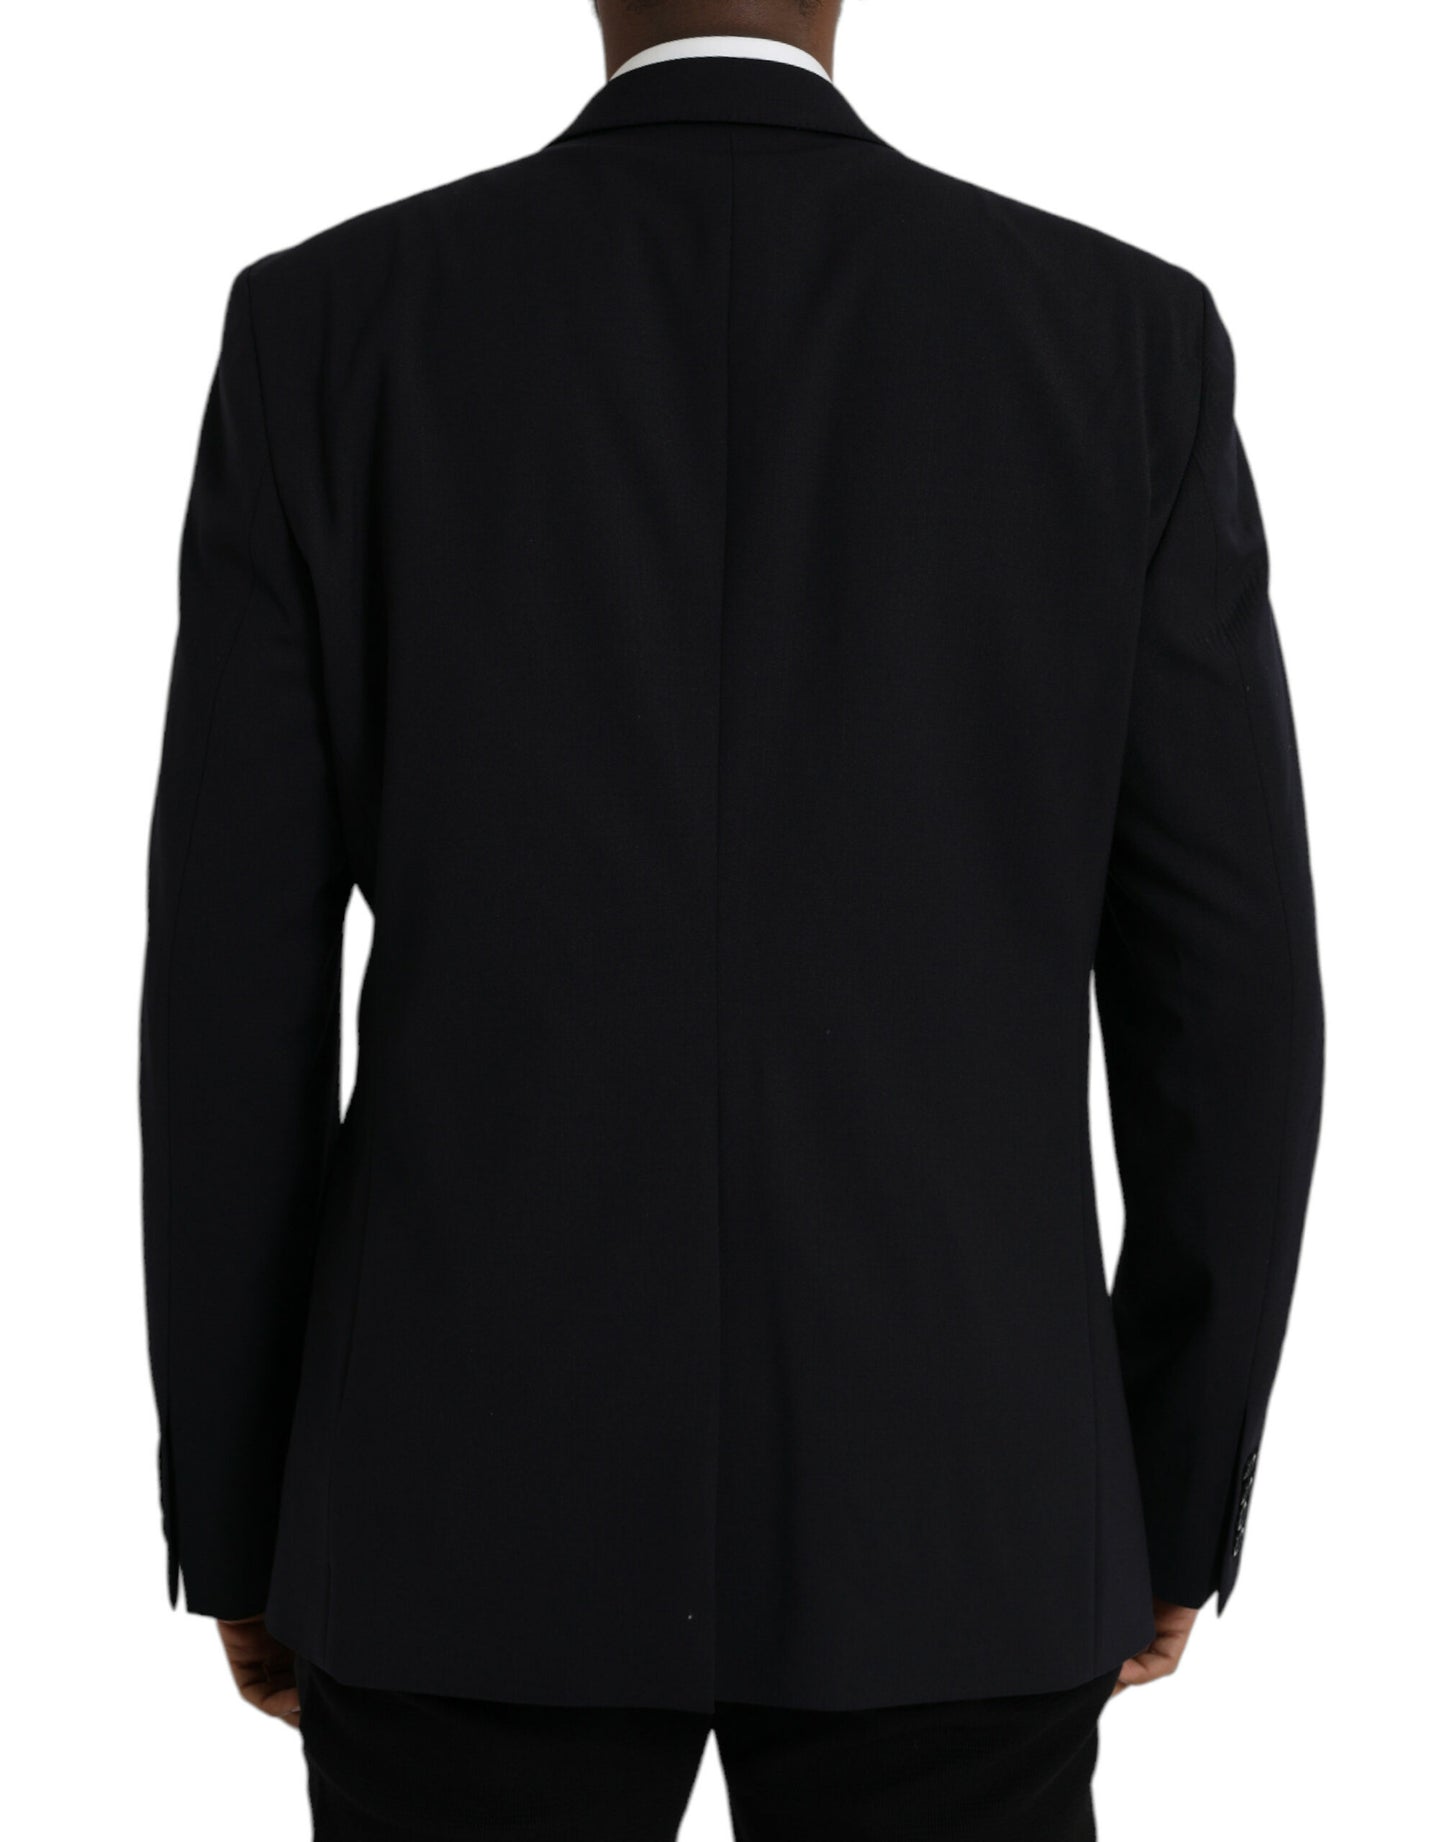 Black MARTINI Single Breasted Coat Blazer